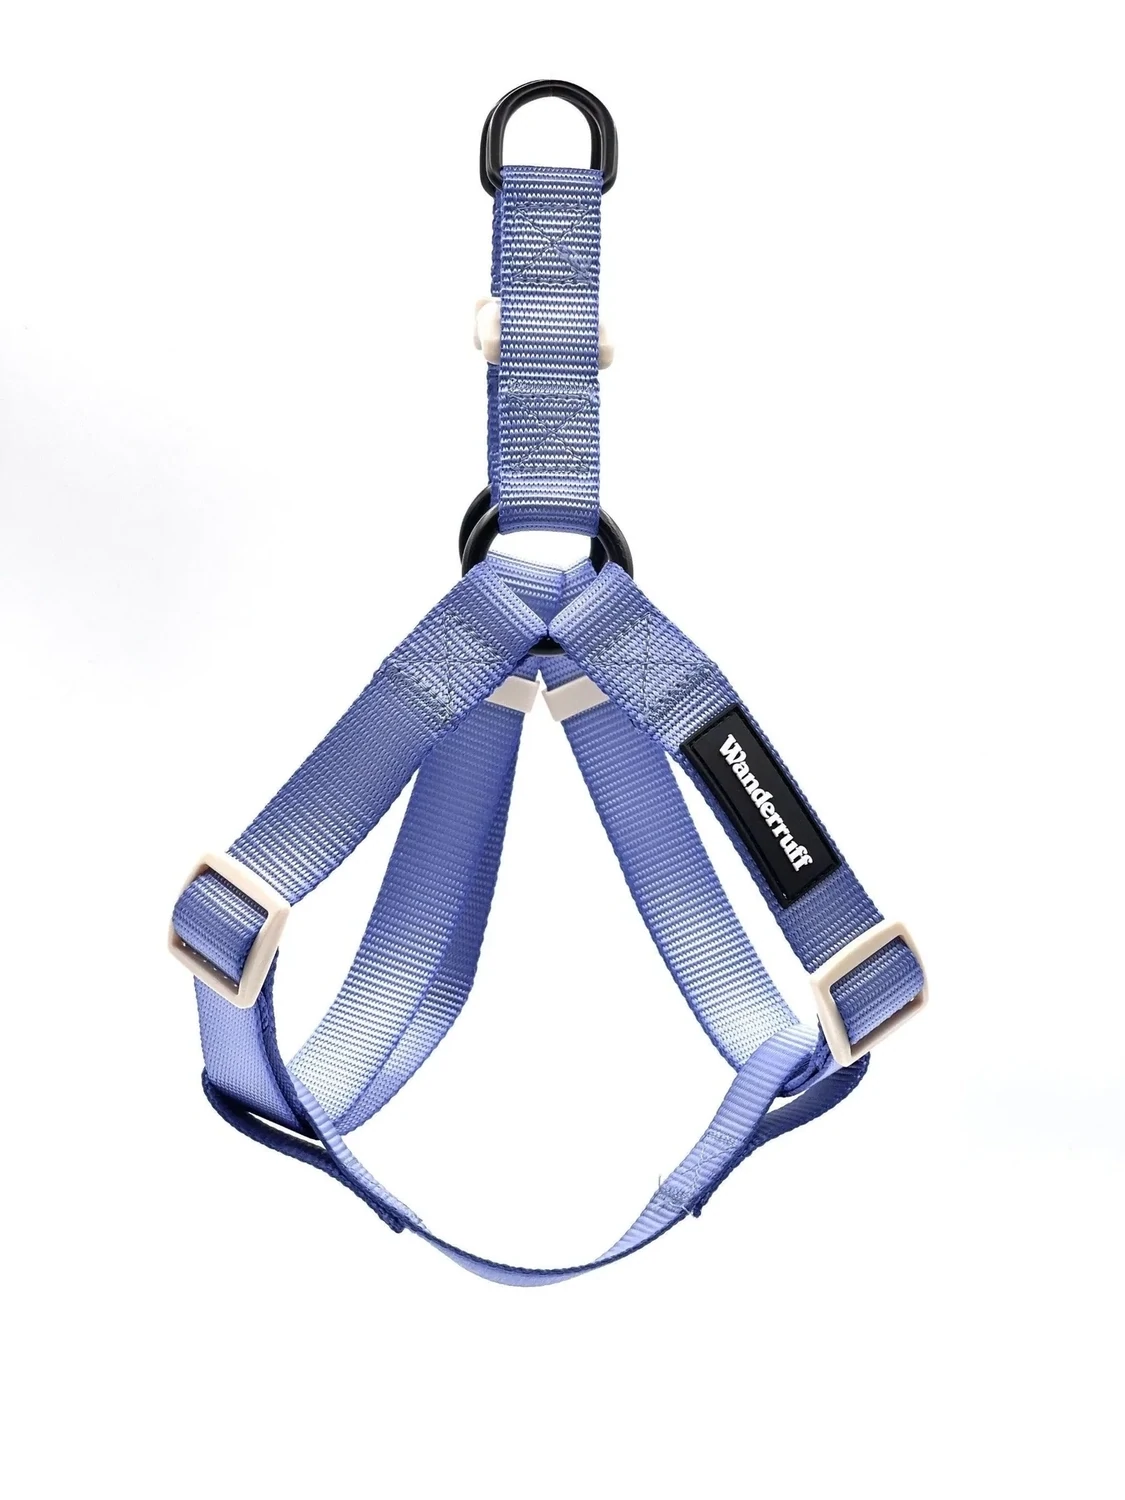 Wanderruff - Kona Blue & White Harness - Medium